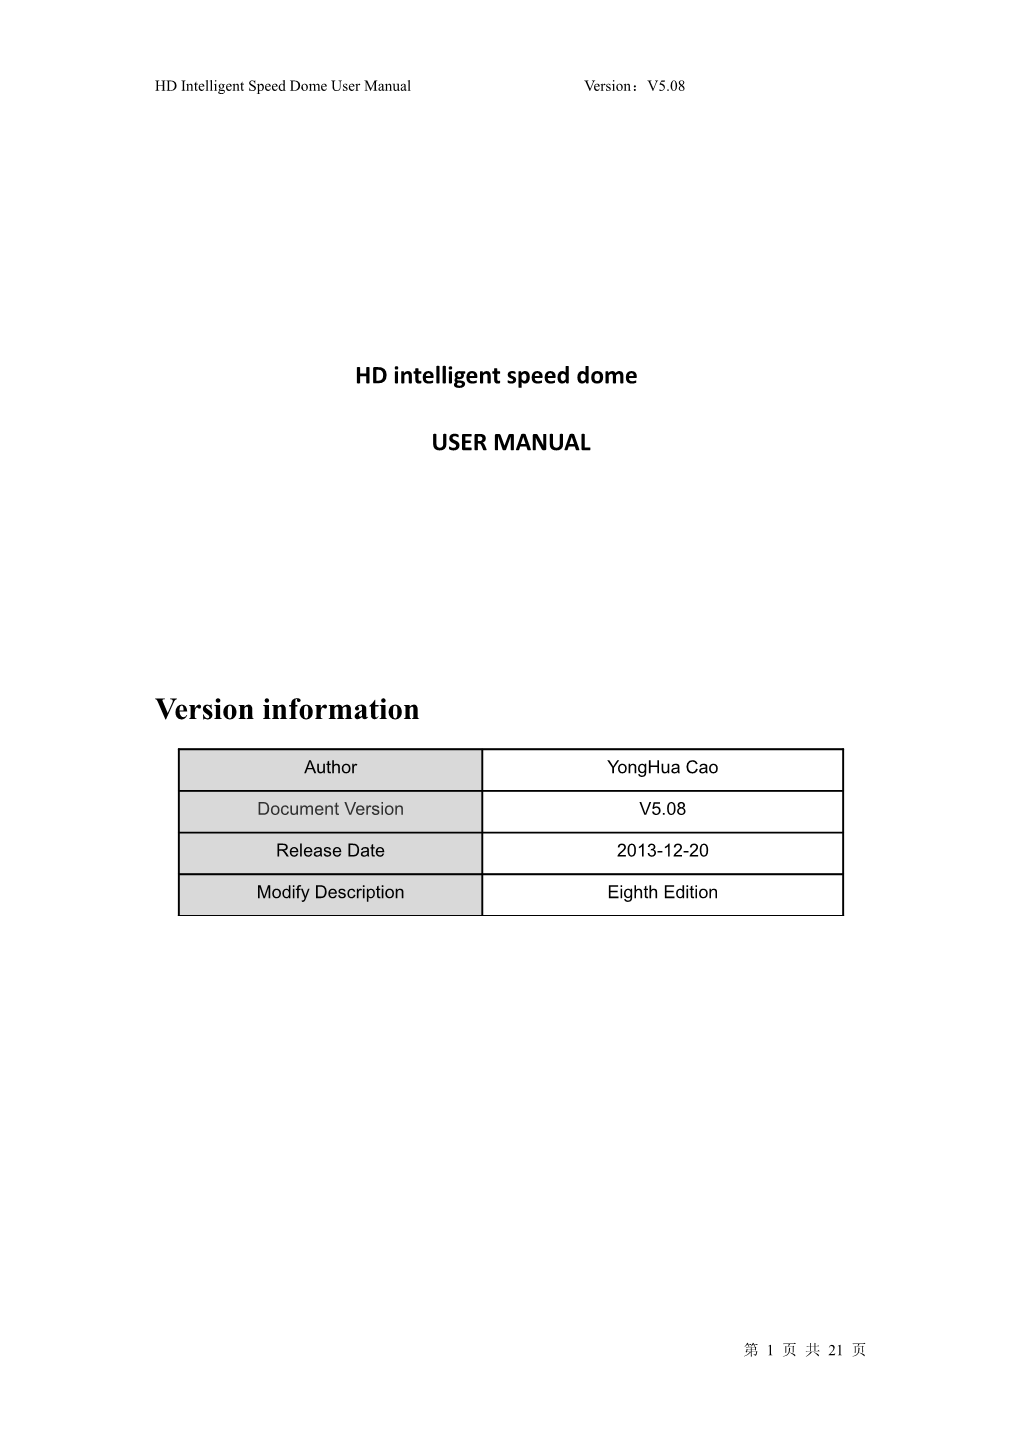 HD Intelligent Speed Dome User Manual Version V5.08